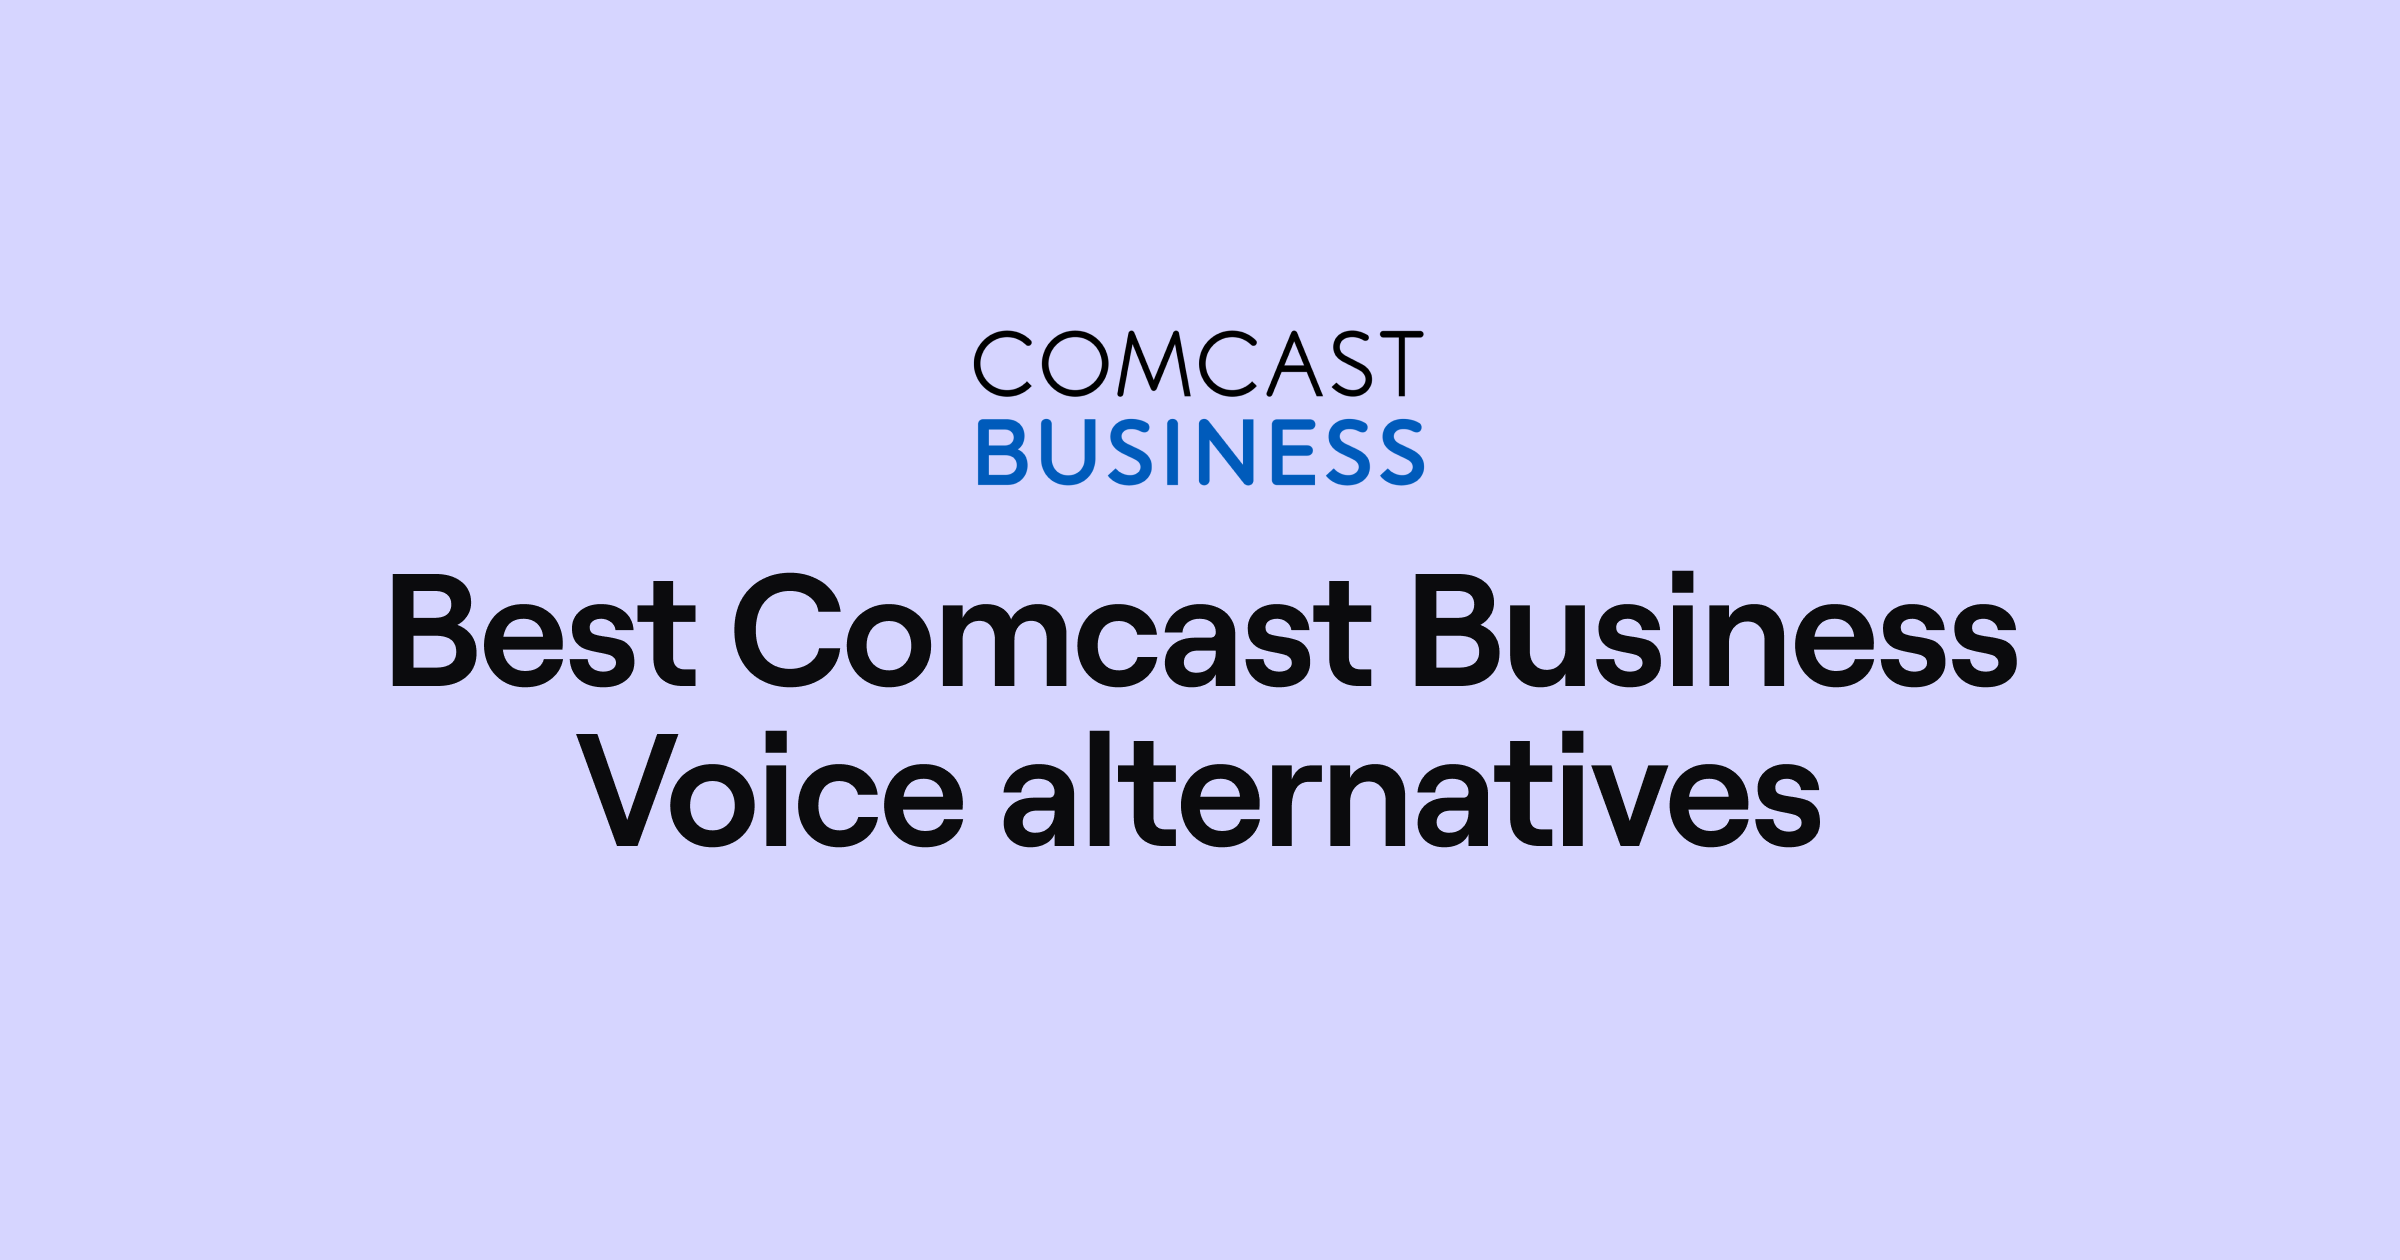 Comcast Business Voice alternatives